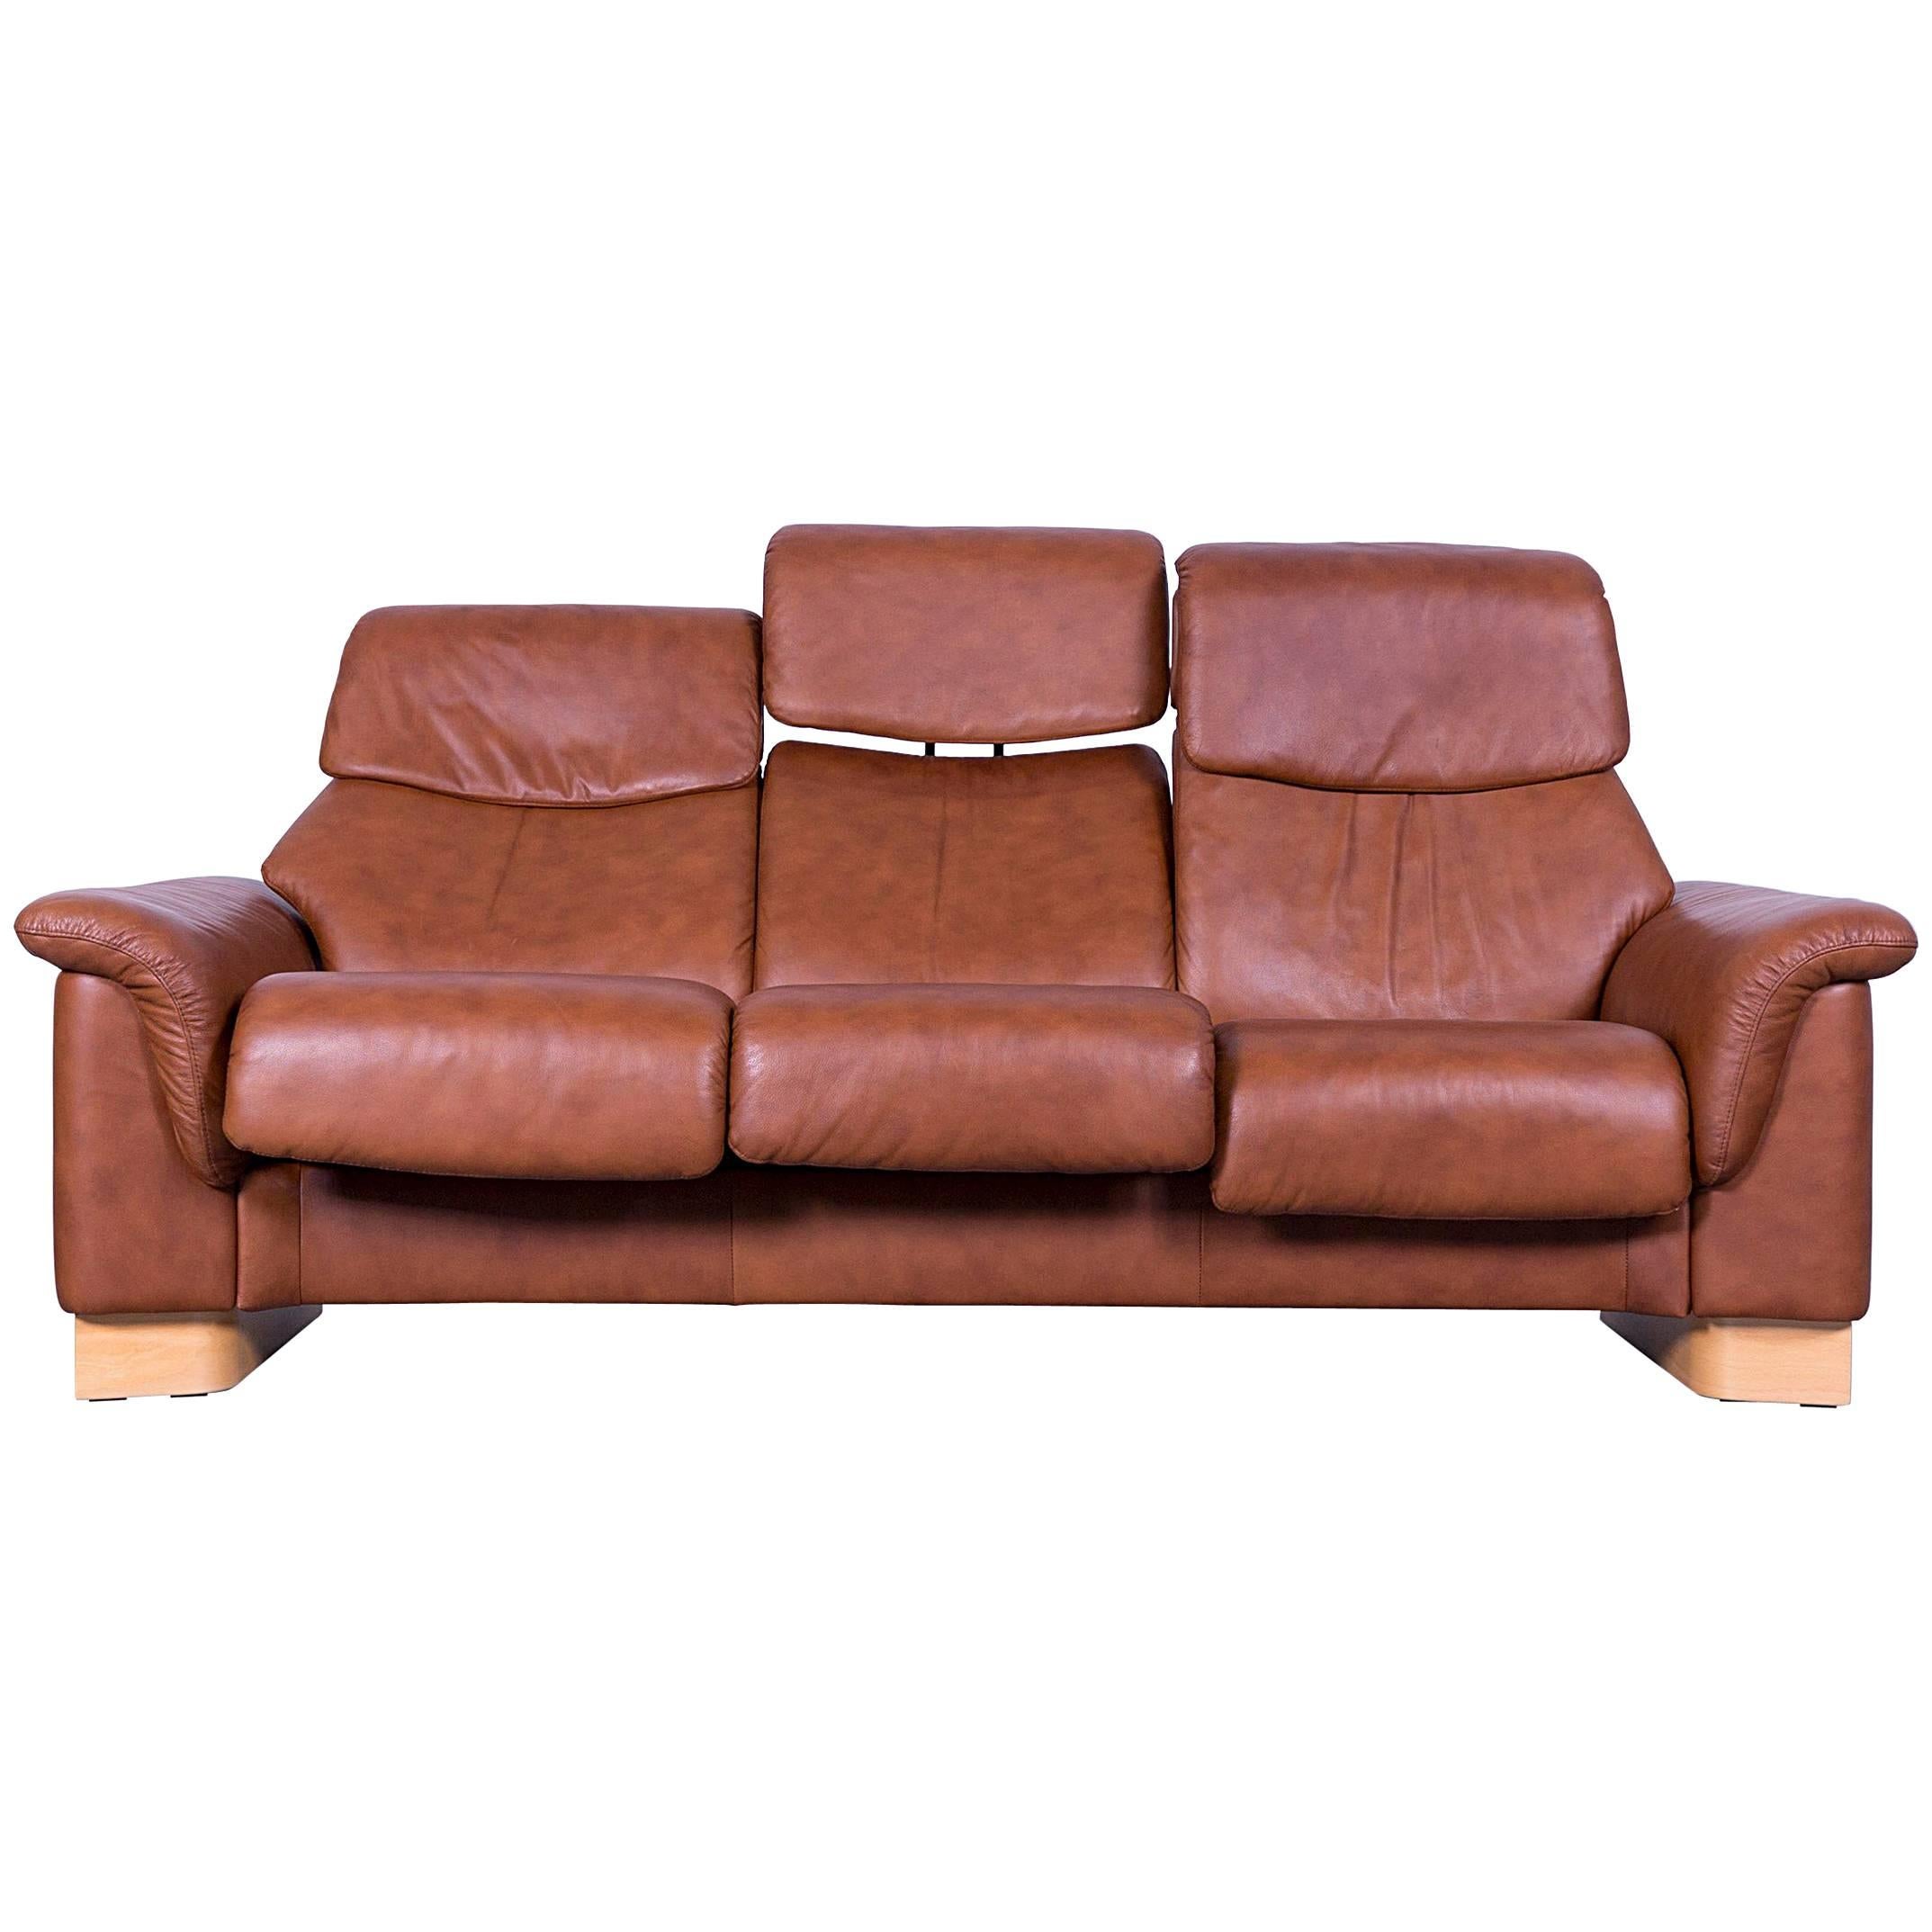 Ekornes Stressless Sofa Brown Leather Three-Seat Recliner